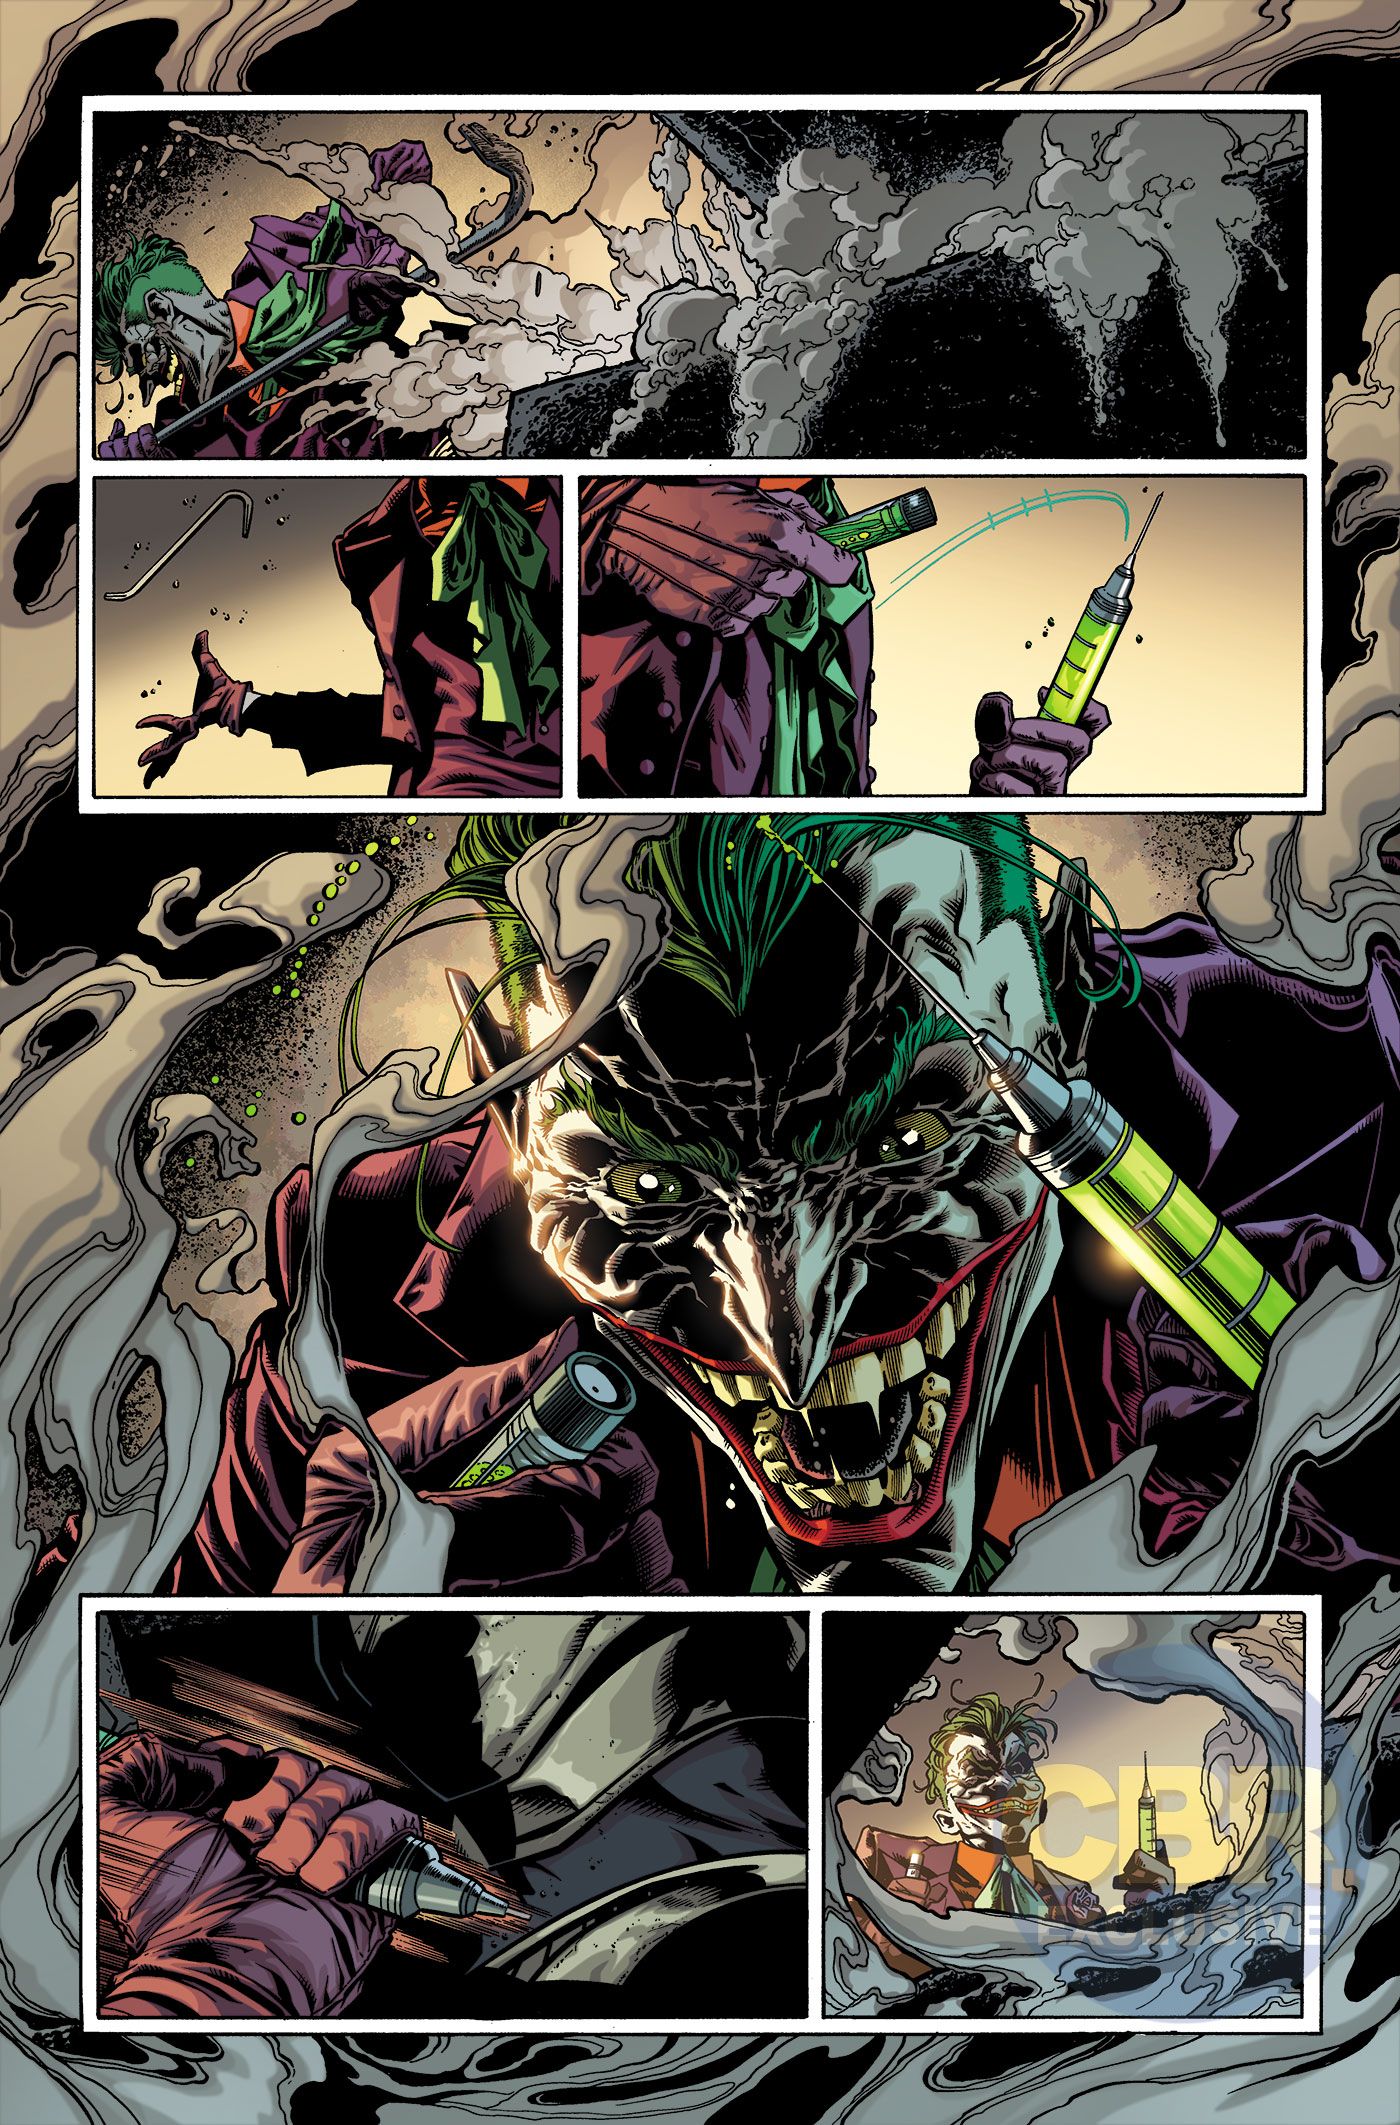 EXCLUSIVE: [SPOILER] Gets a Joker Toxin Injection in Detective Comics #1023